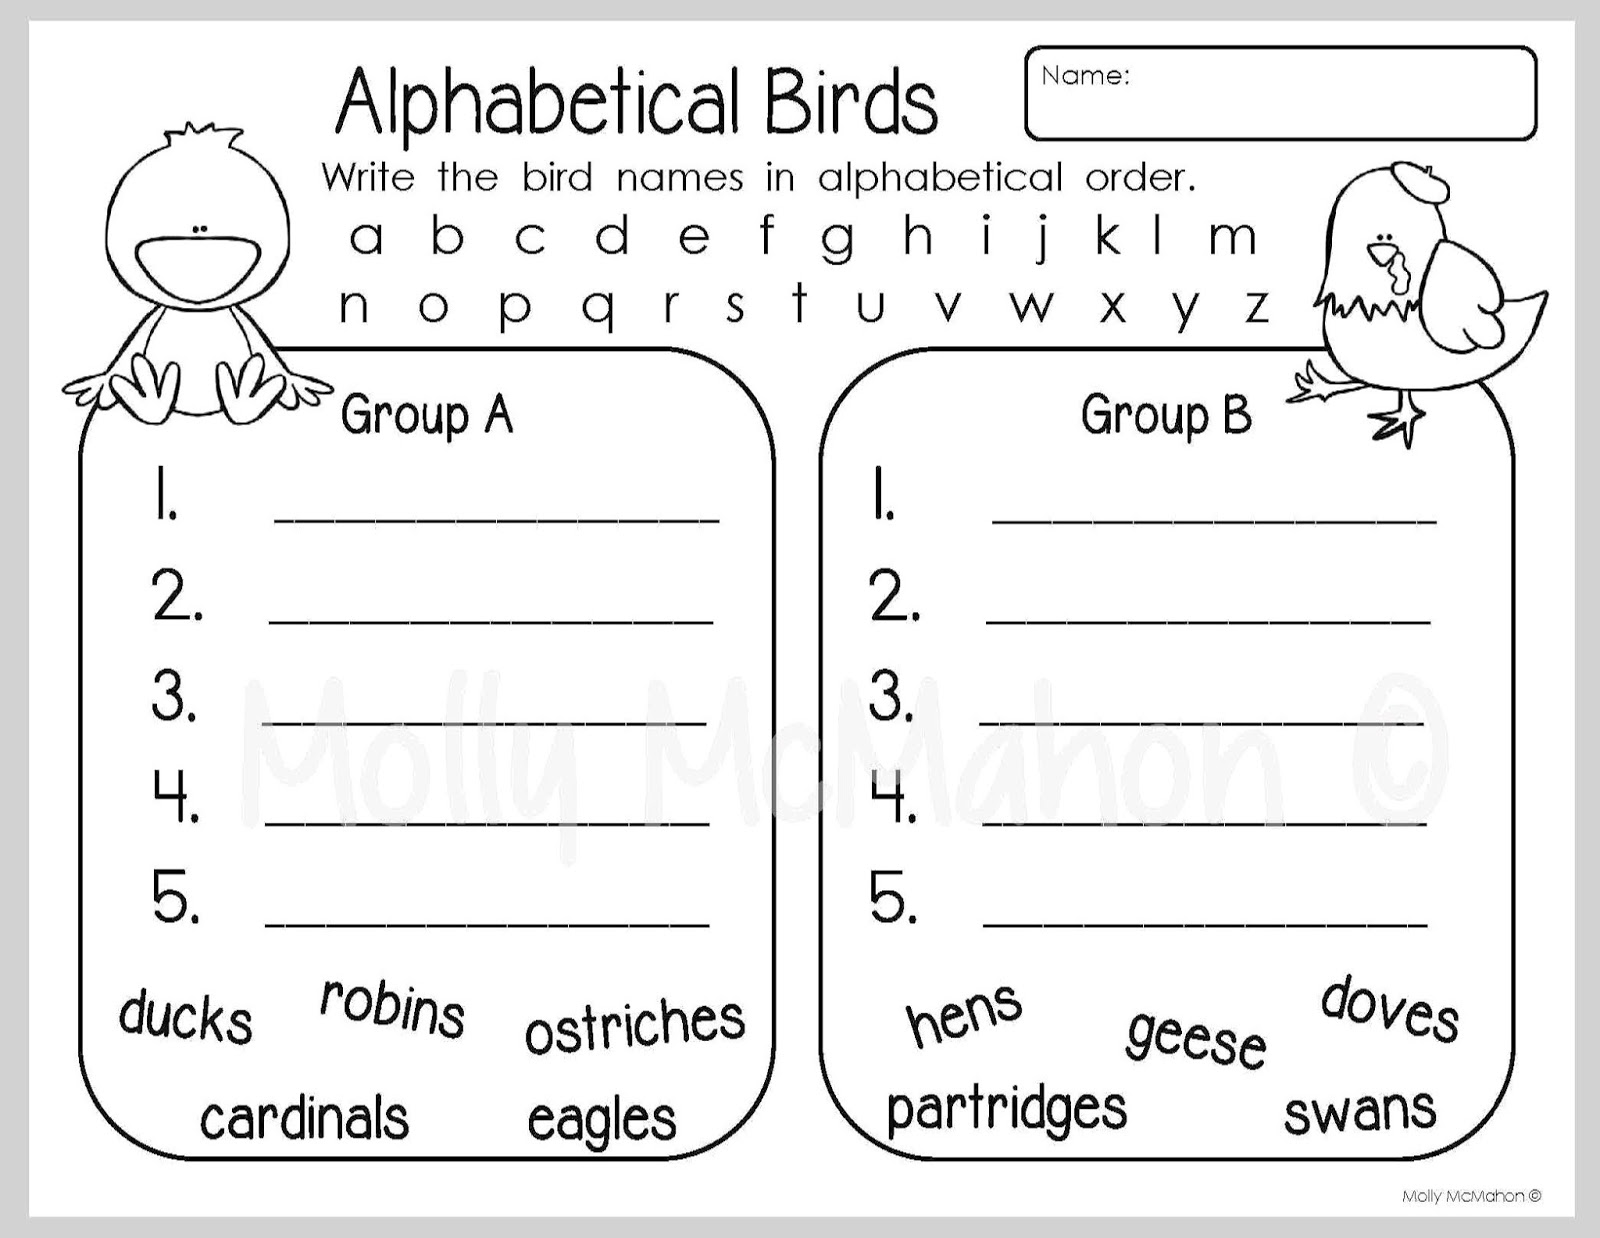 Alphabetical order homework